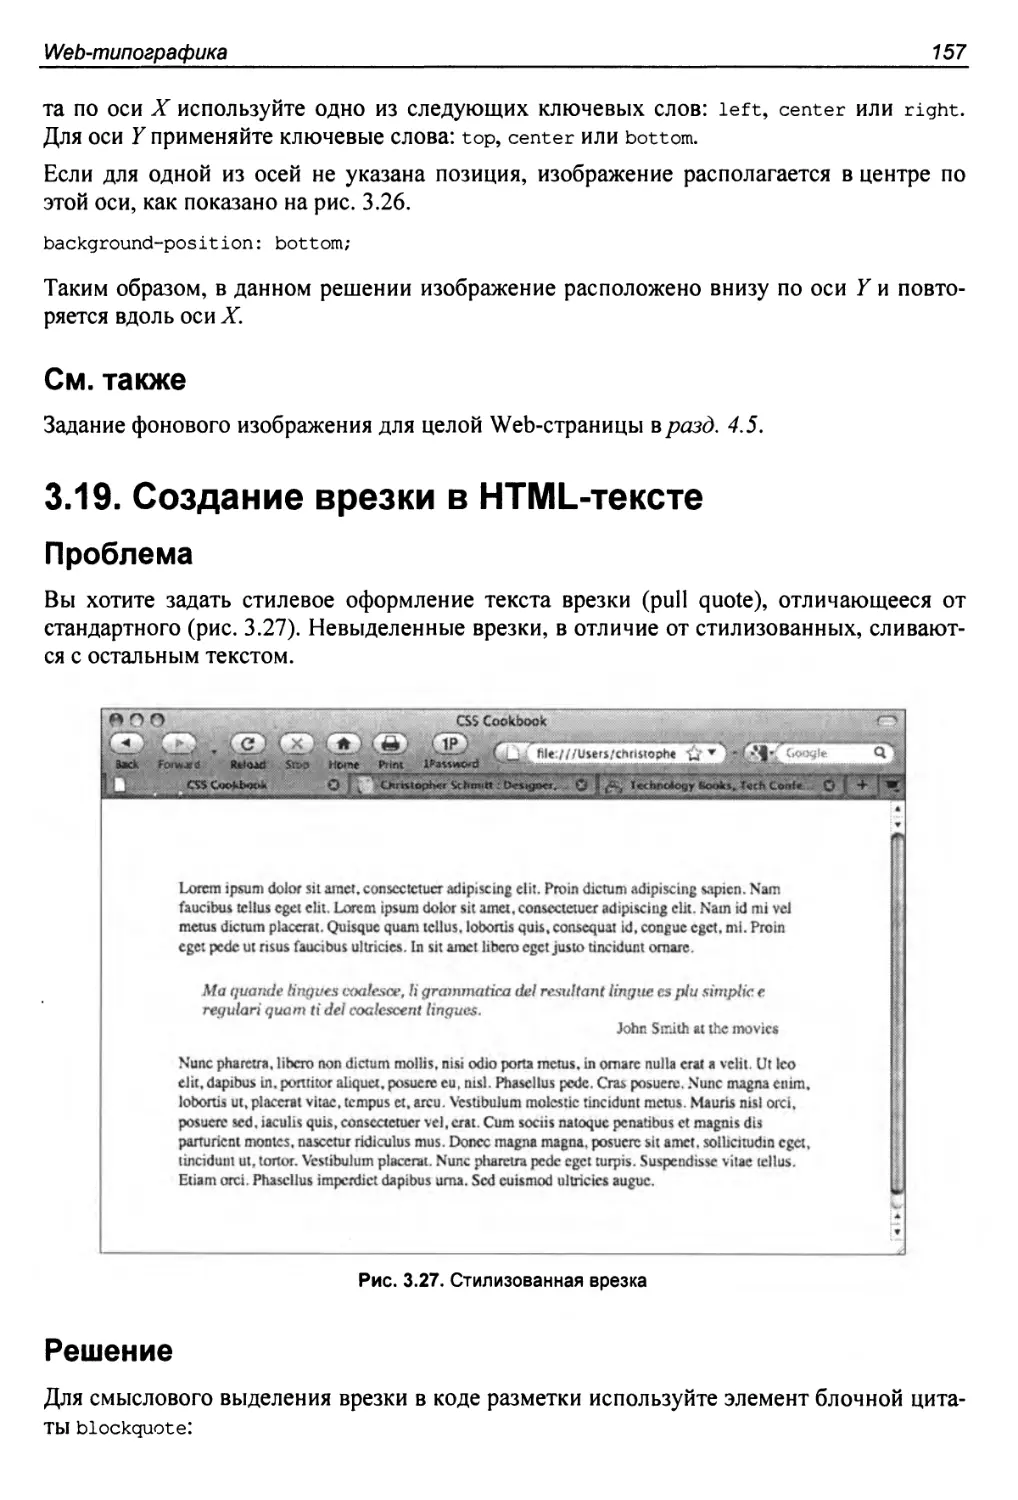 3.19. Создание врезки в HTML-тексте